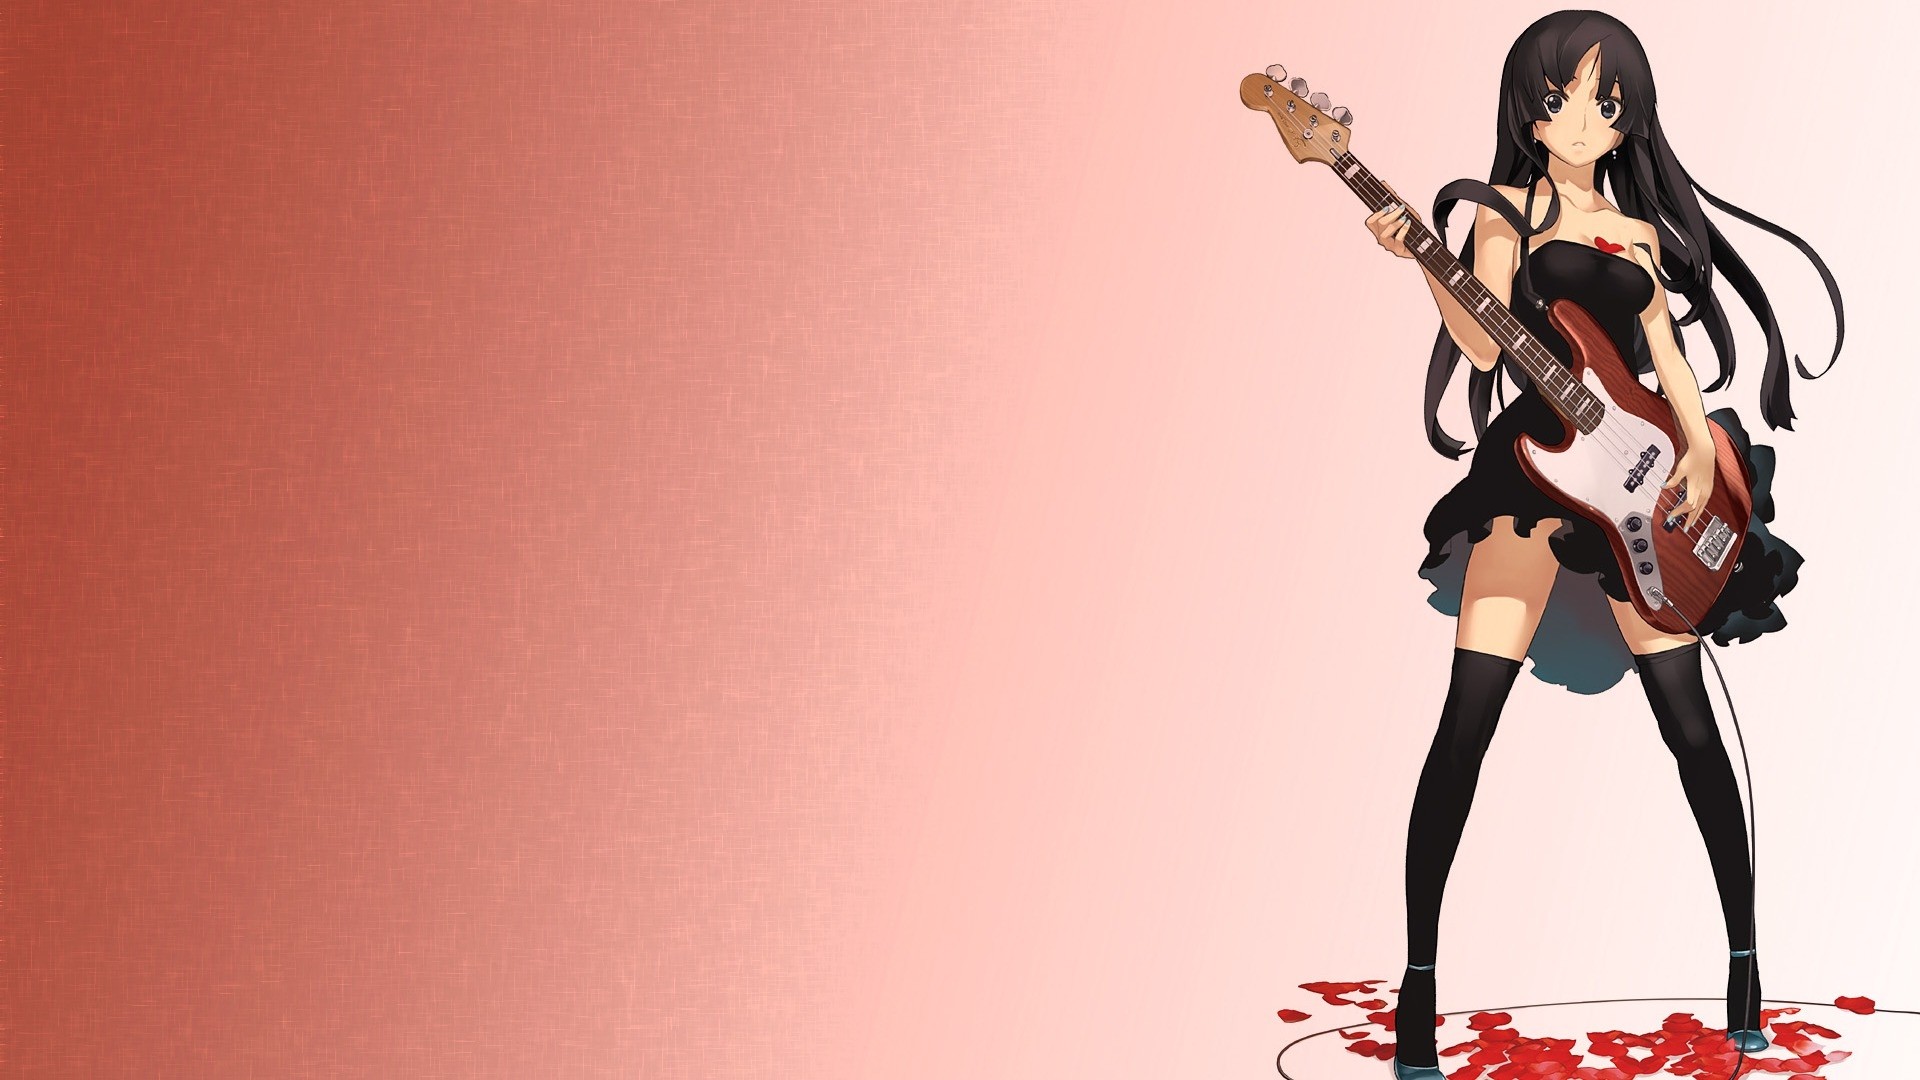 1920x1080 Wallpaper Girl, Anime, Guitar, Musician, Rock